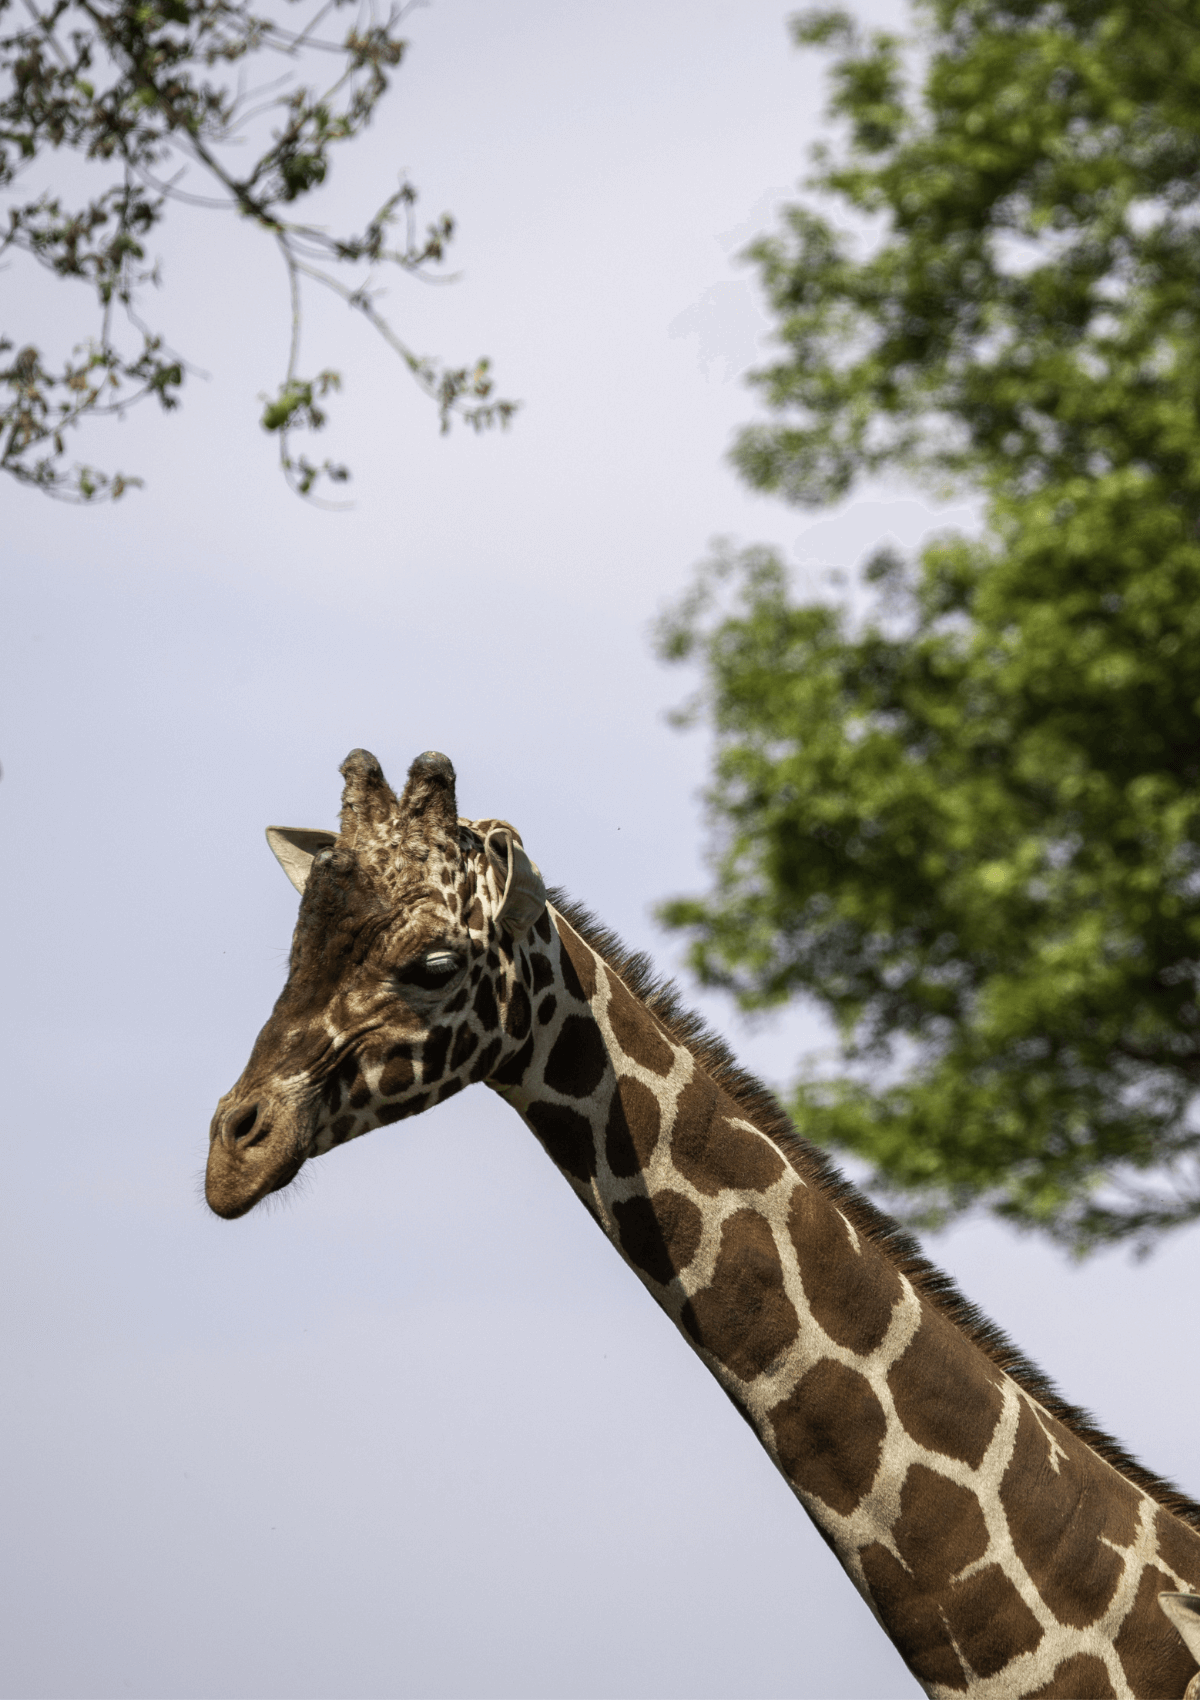 Giraffe at Whipsnade Zoo in England 